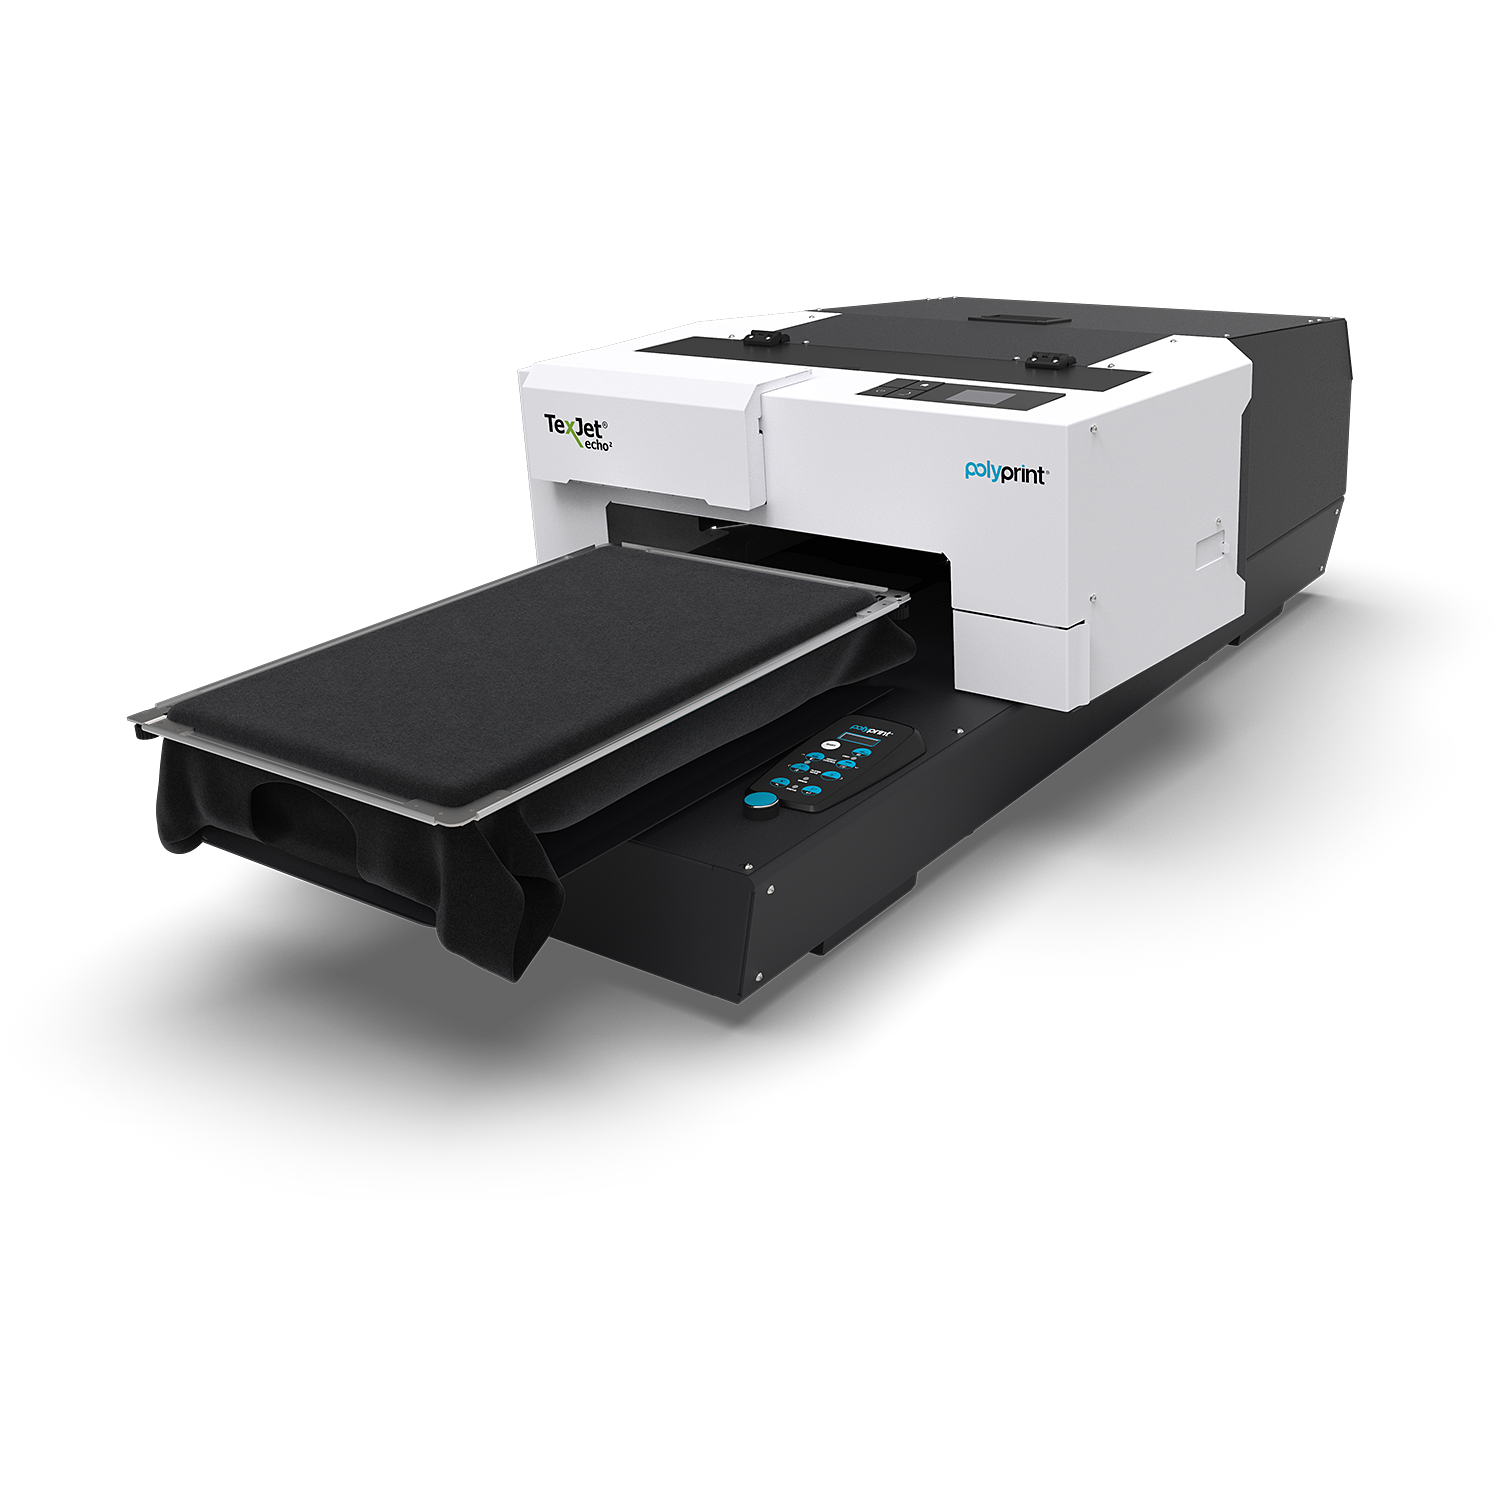 polyprint texjet echo2 dtg printer